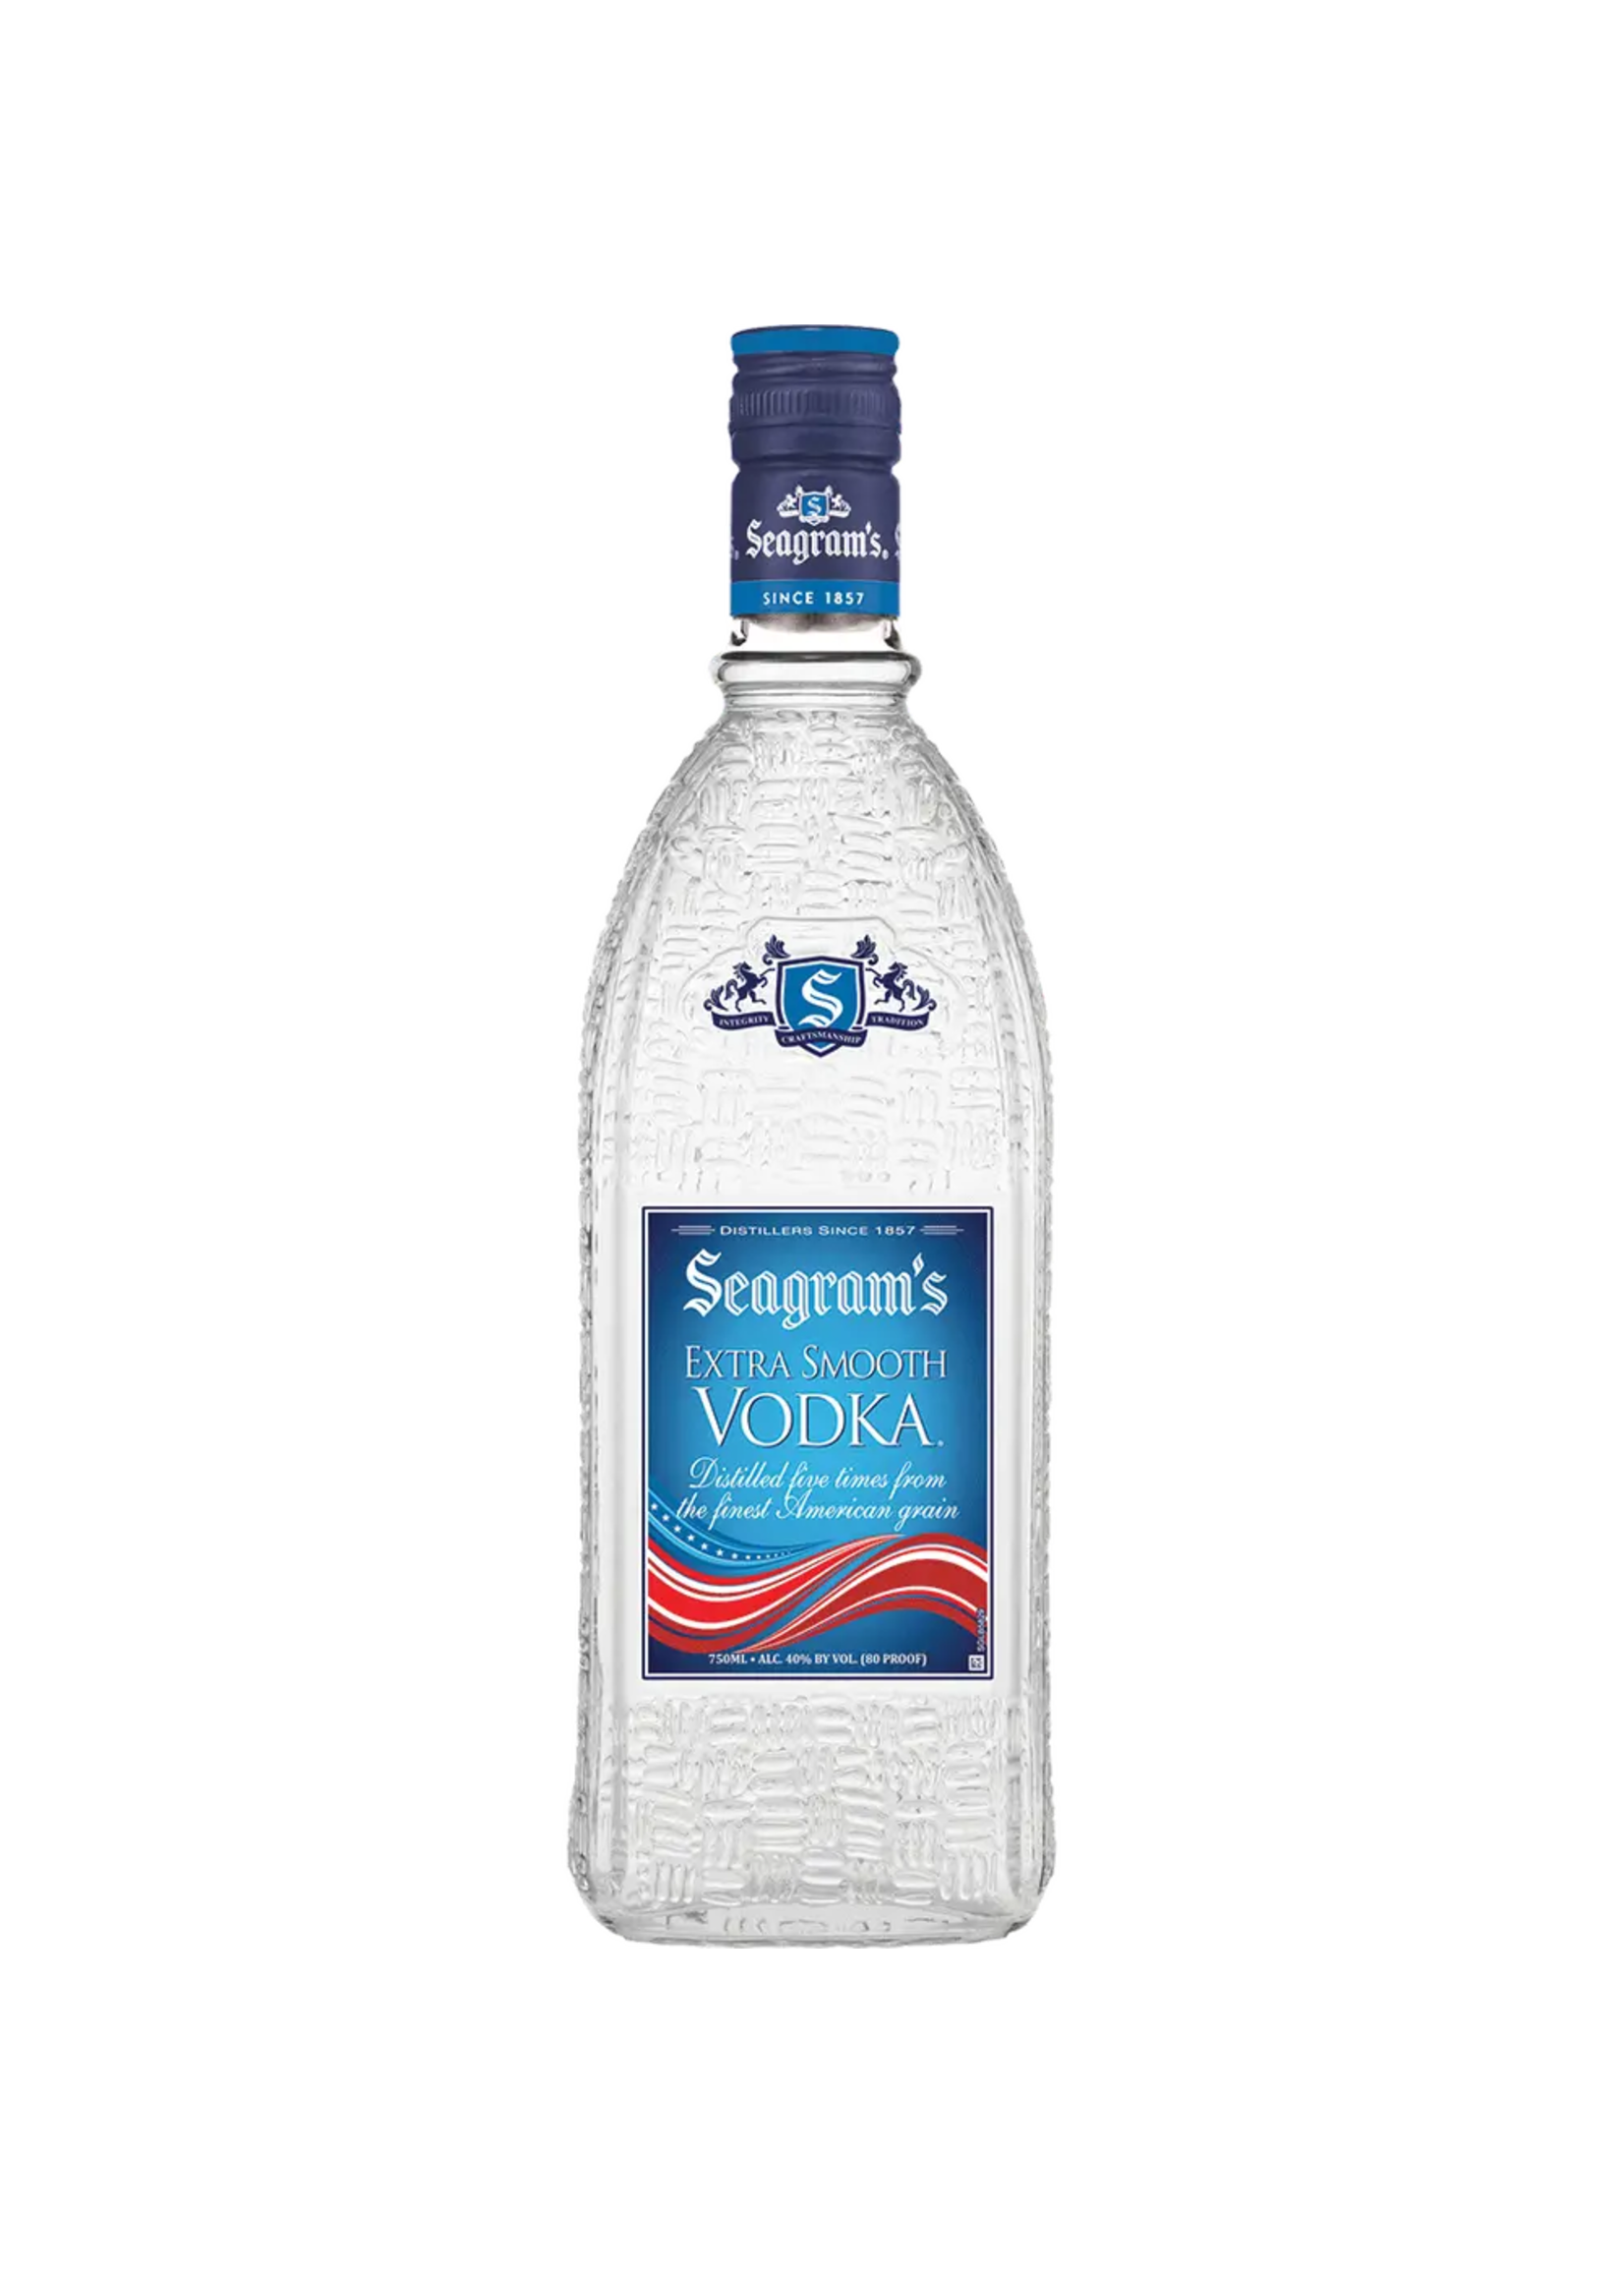 Seagrams Original Vodka 80Proof Pet 750ml